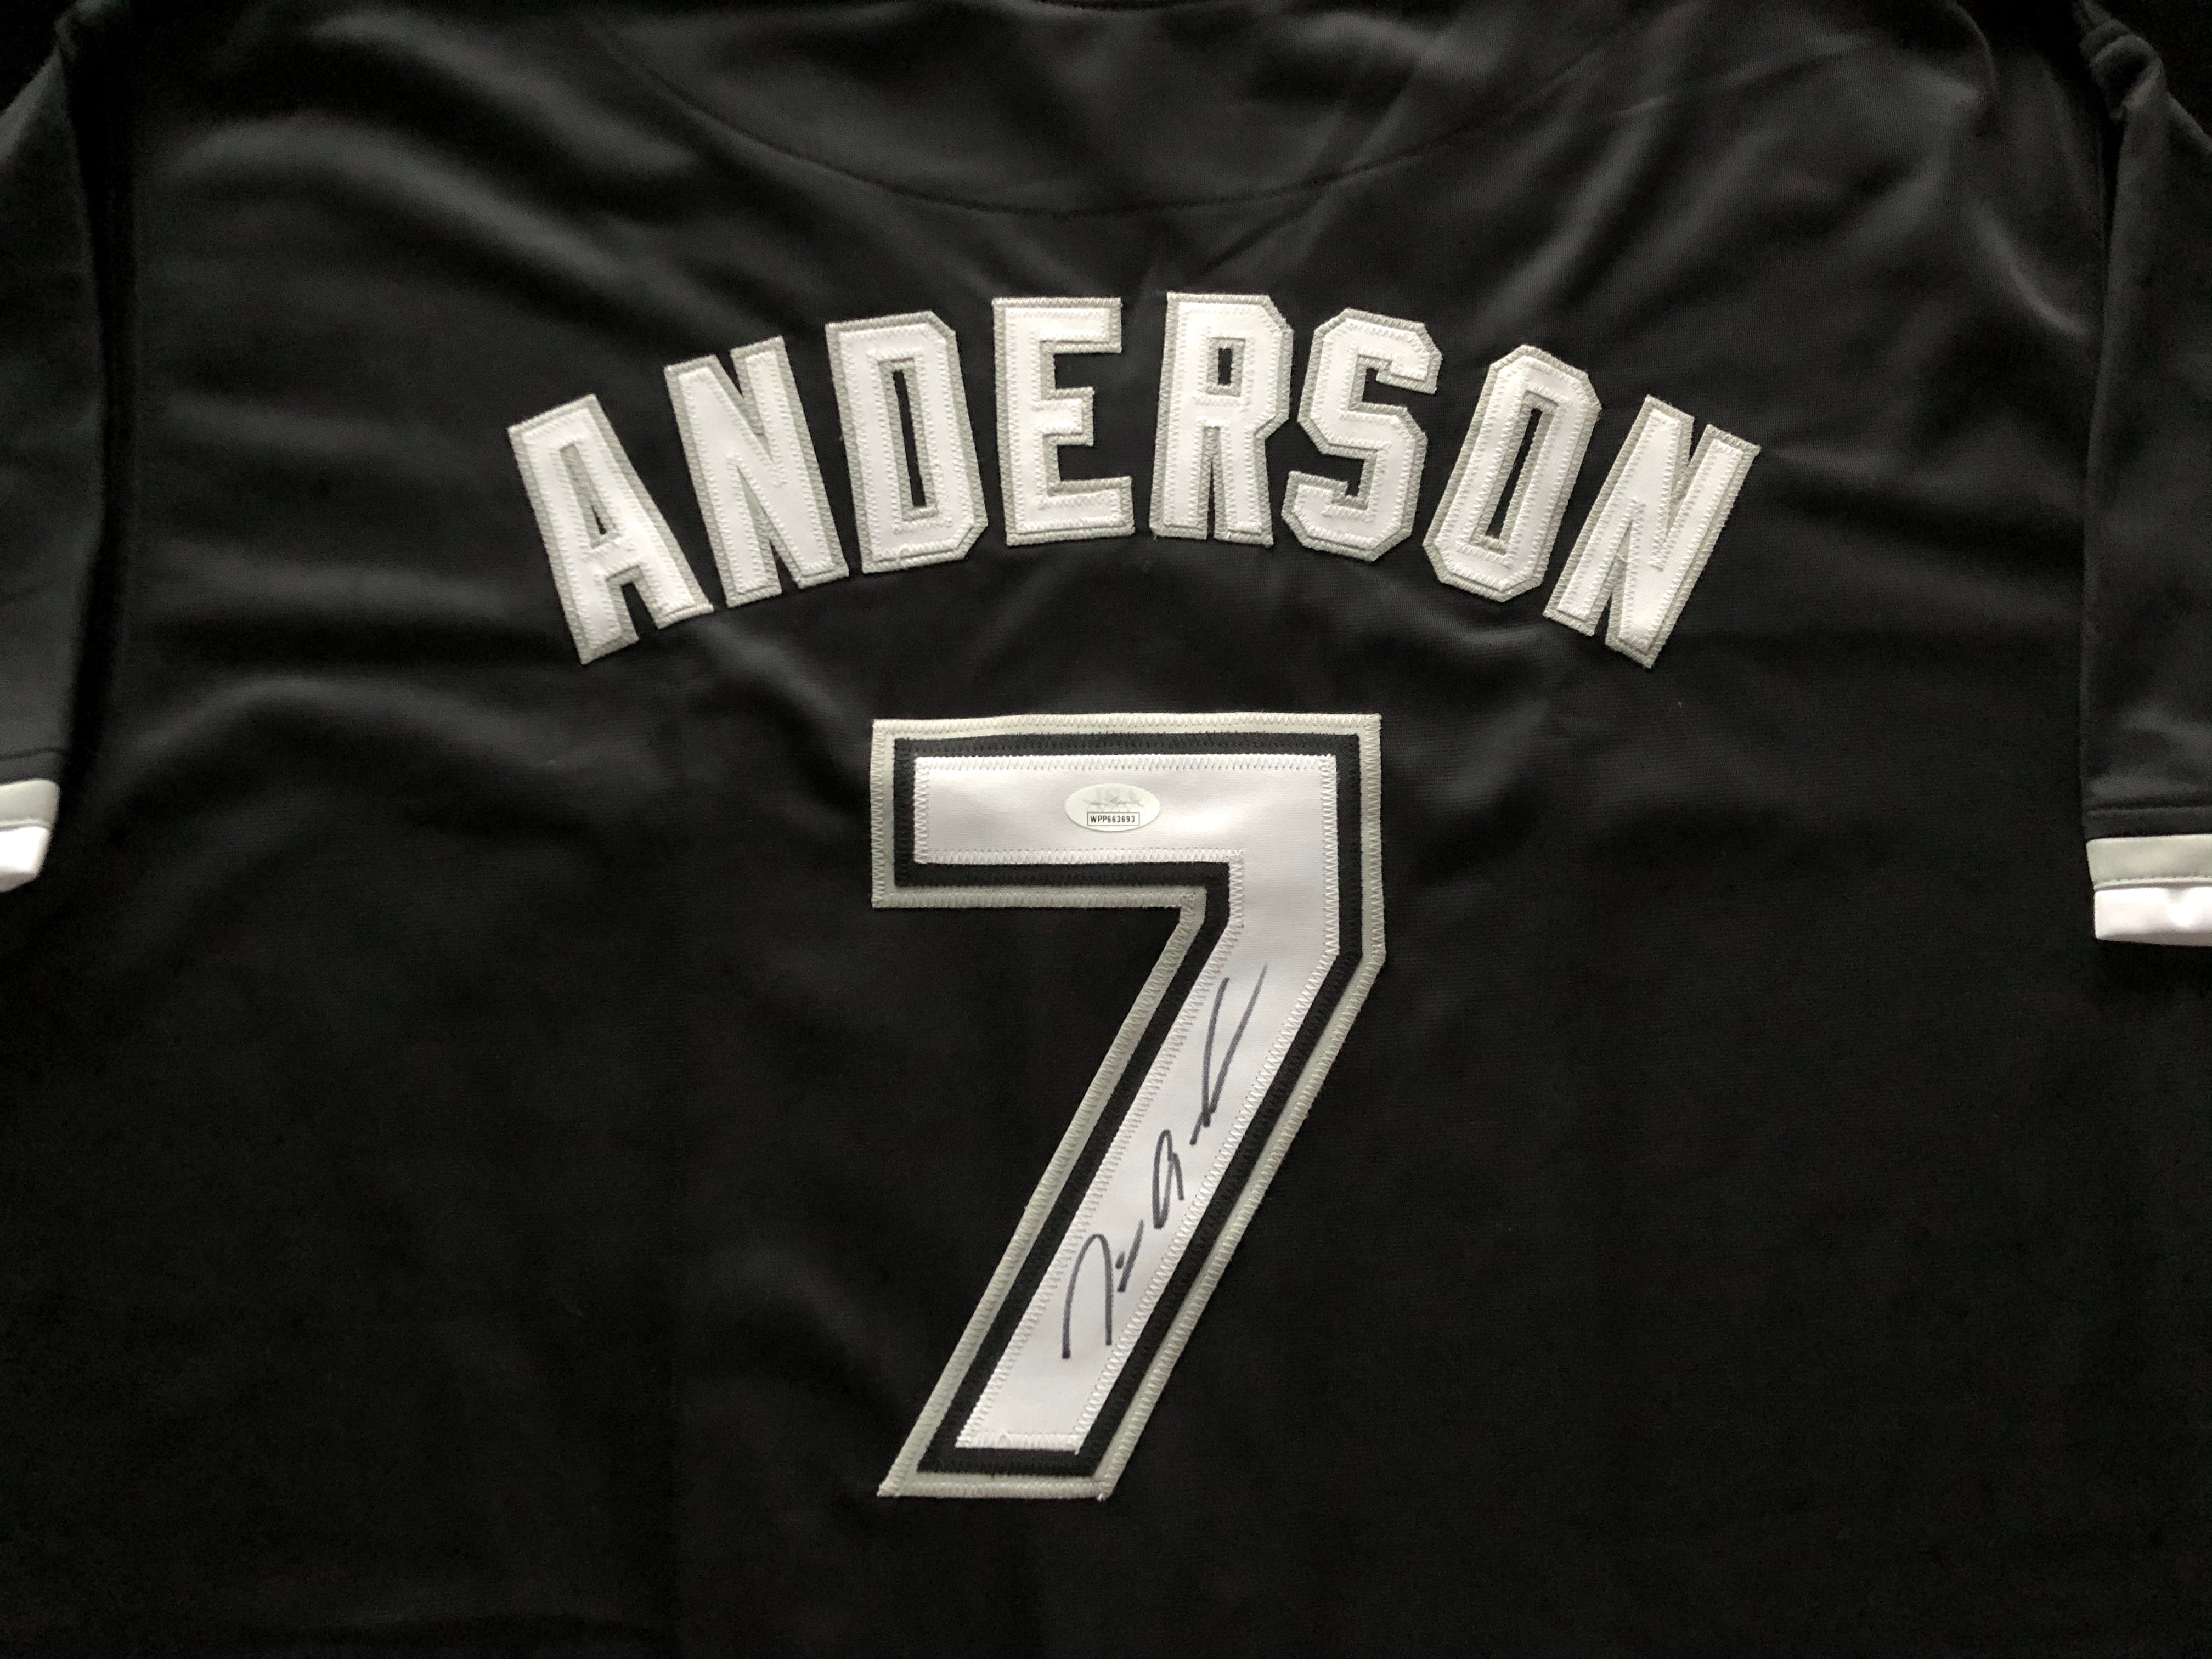 Tim Anderson Signed Autographed Black Baseball Jersey: BM